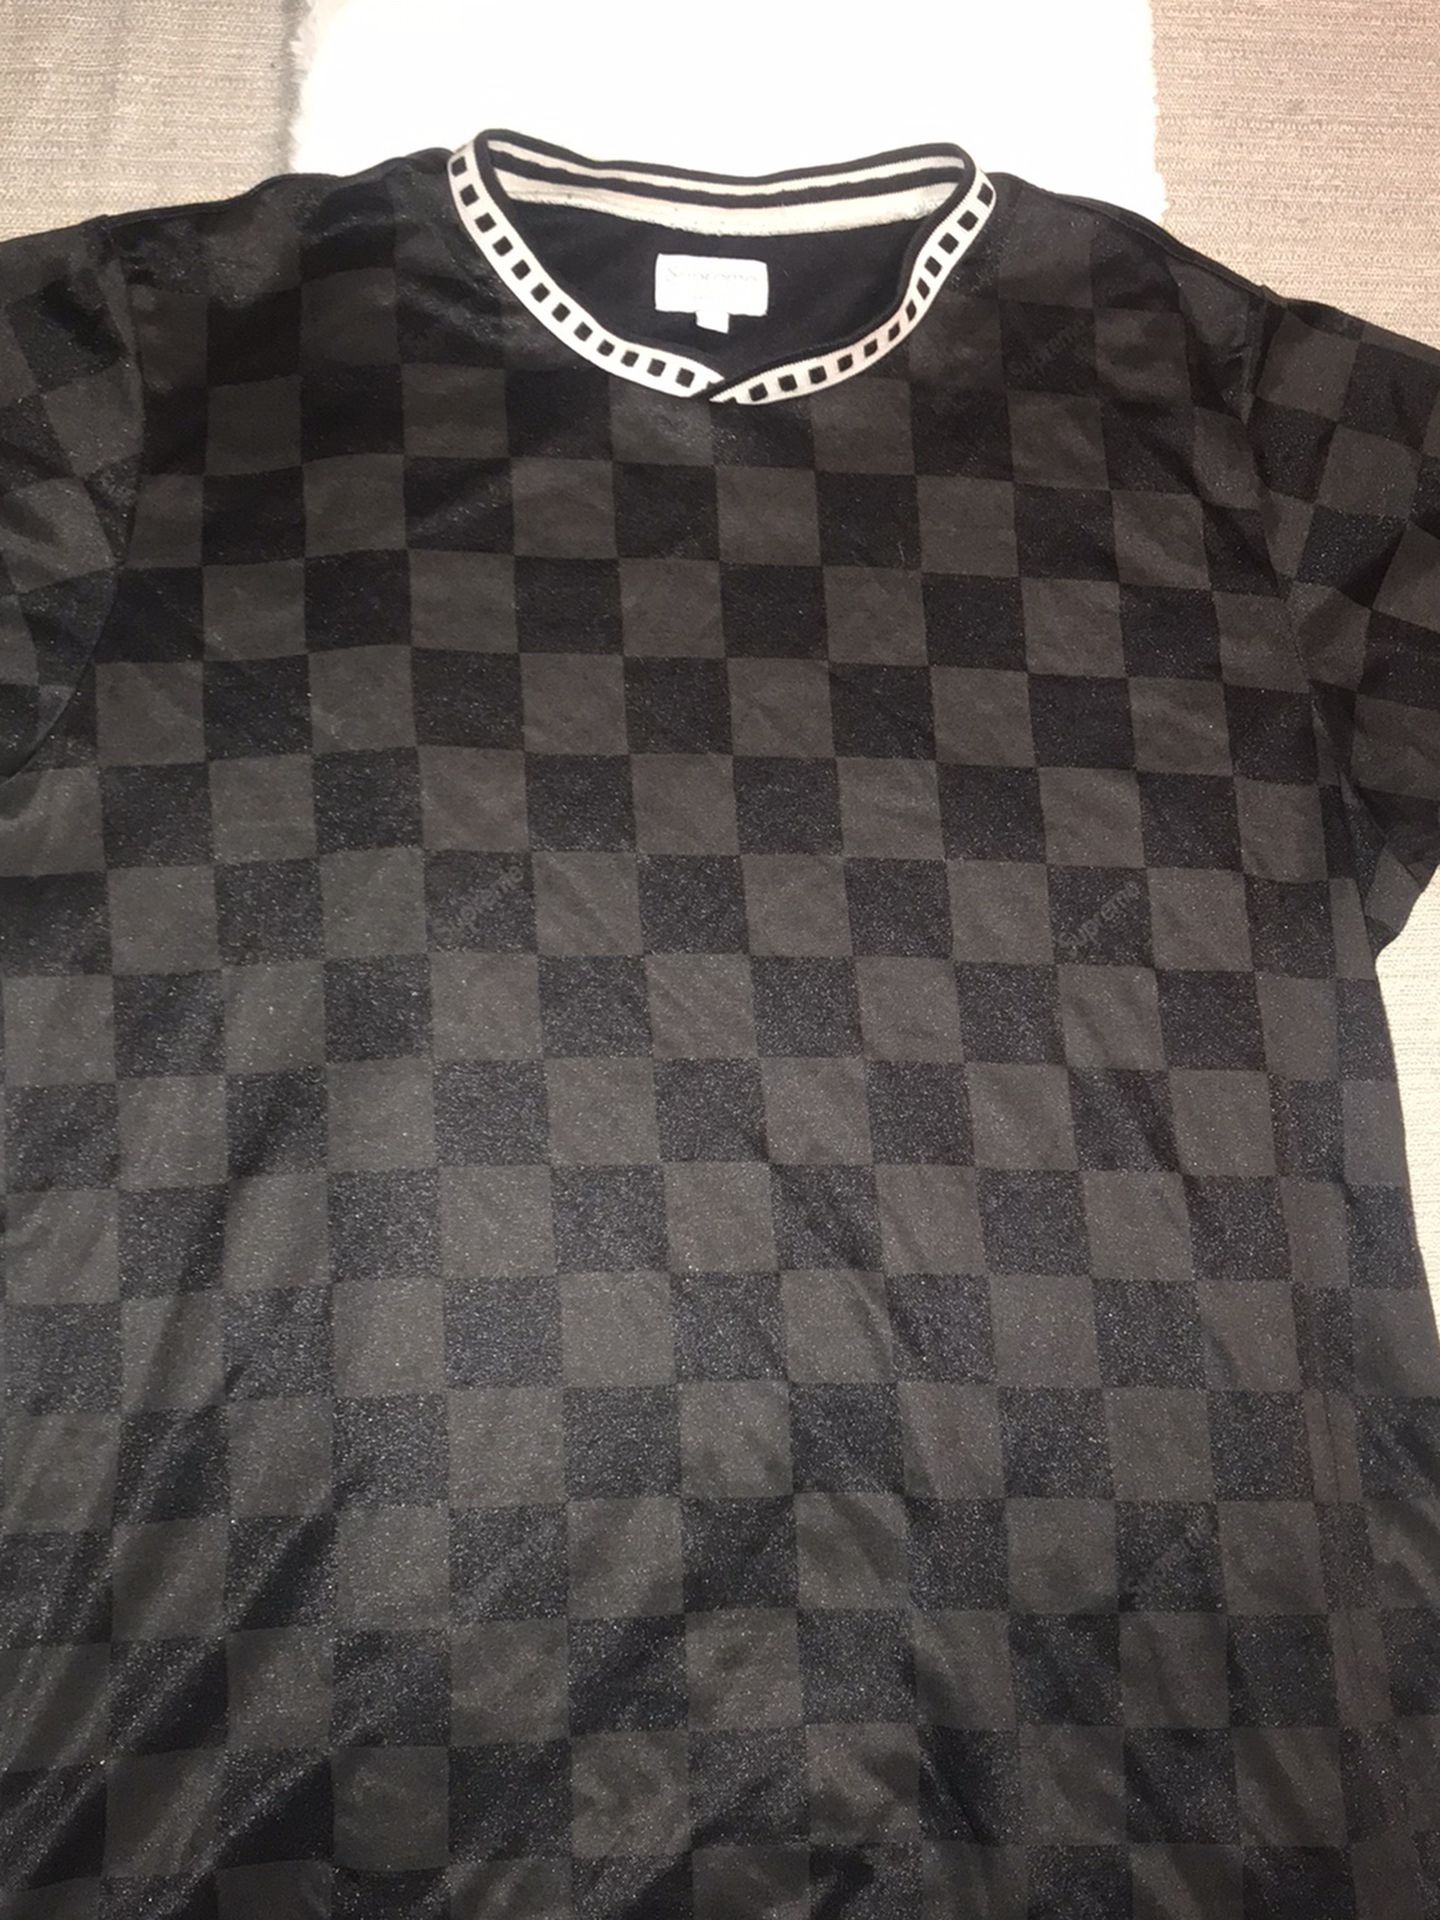 Supreme Checker Soccer Jersey Black